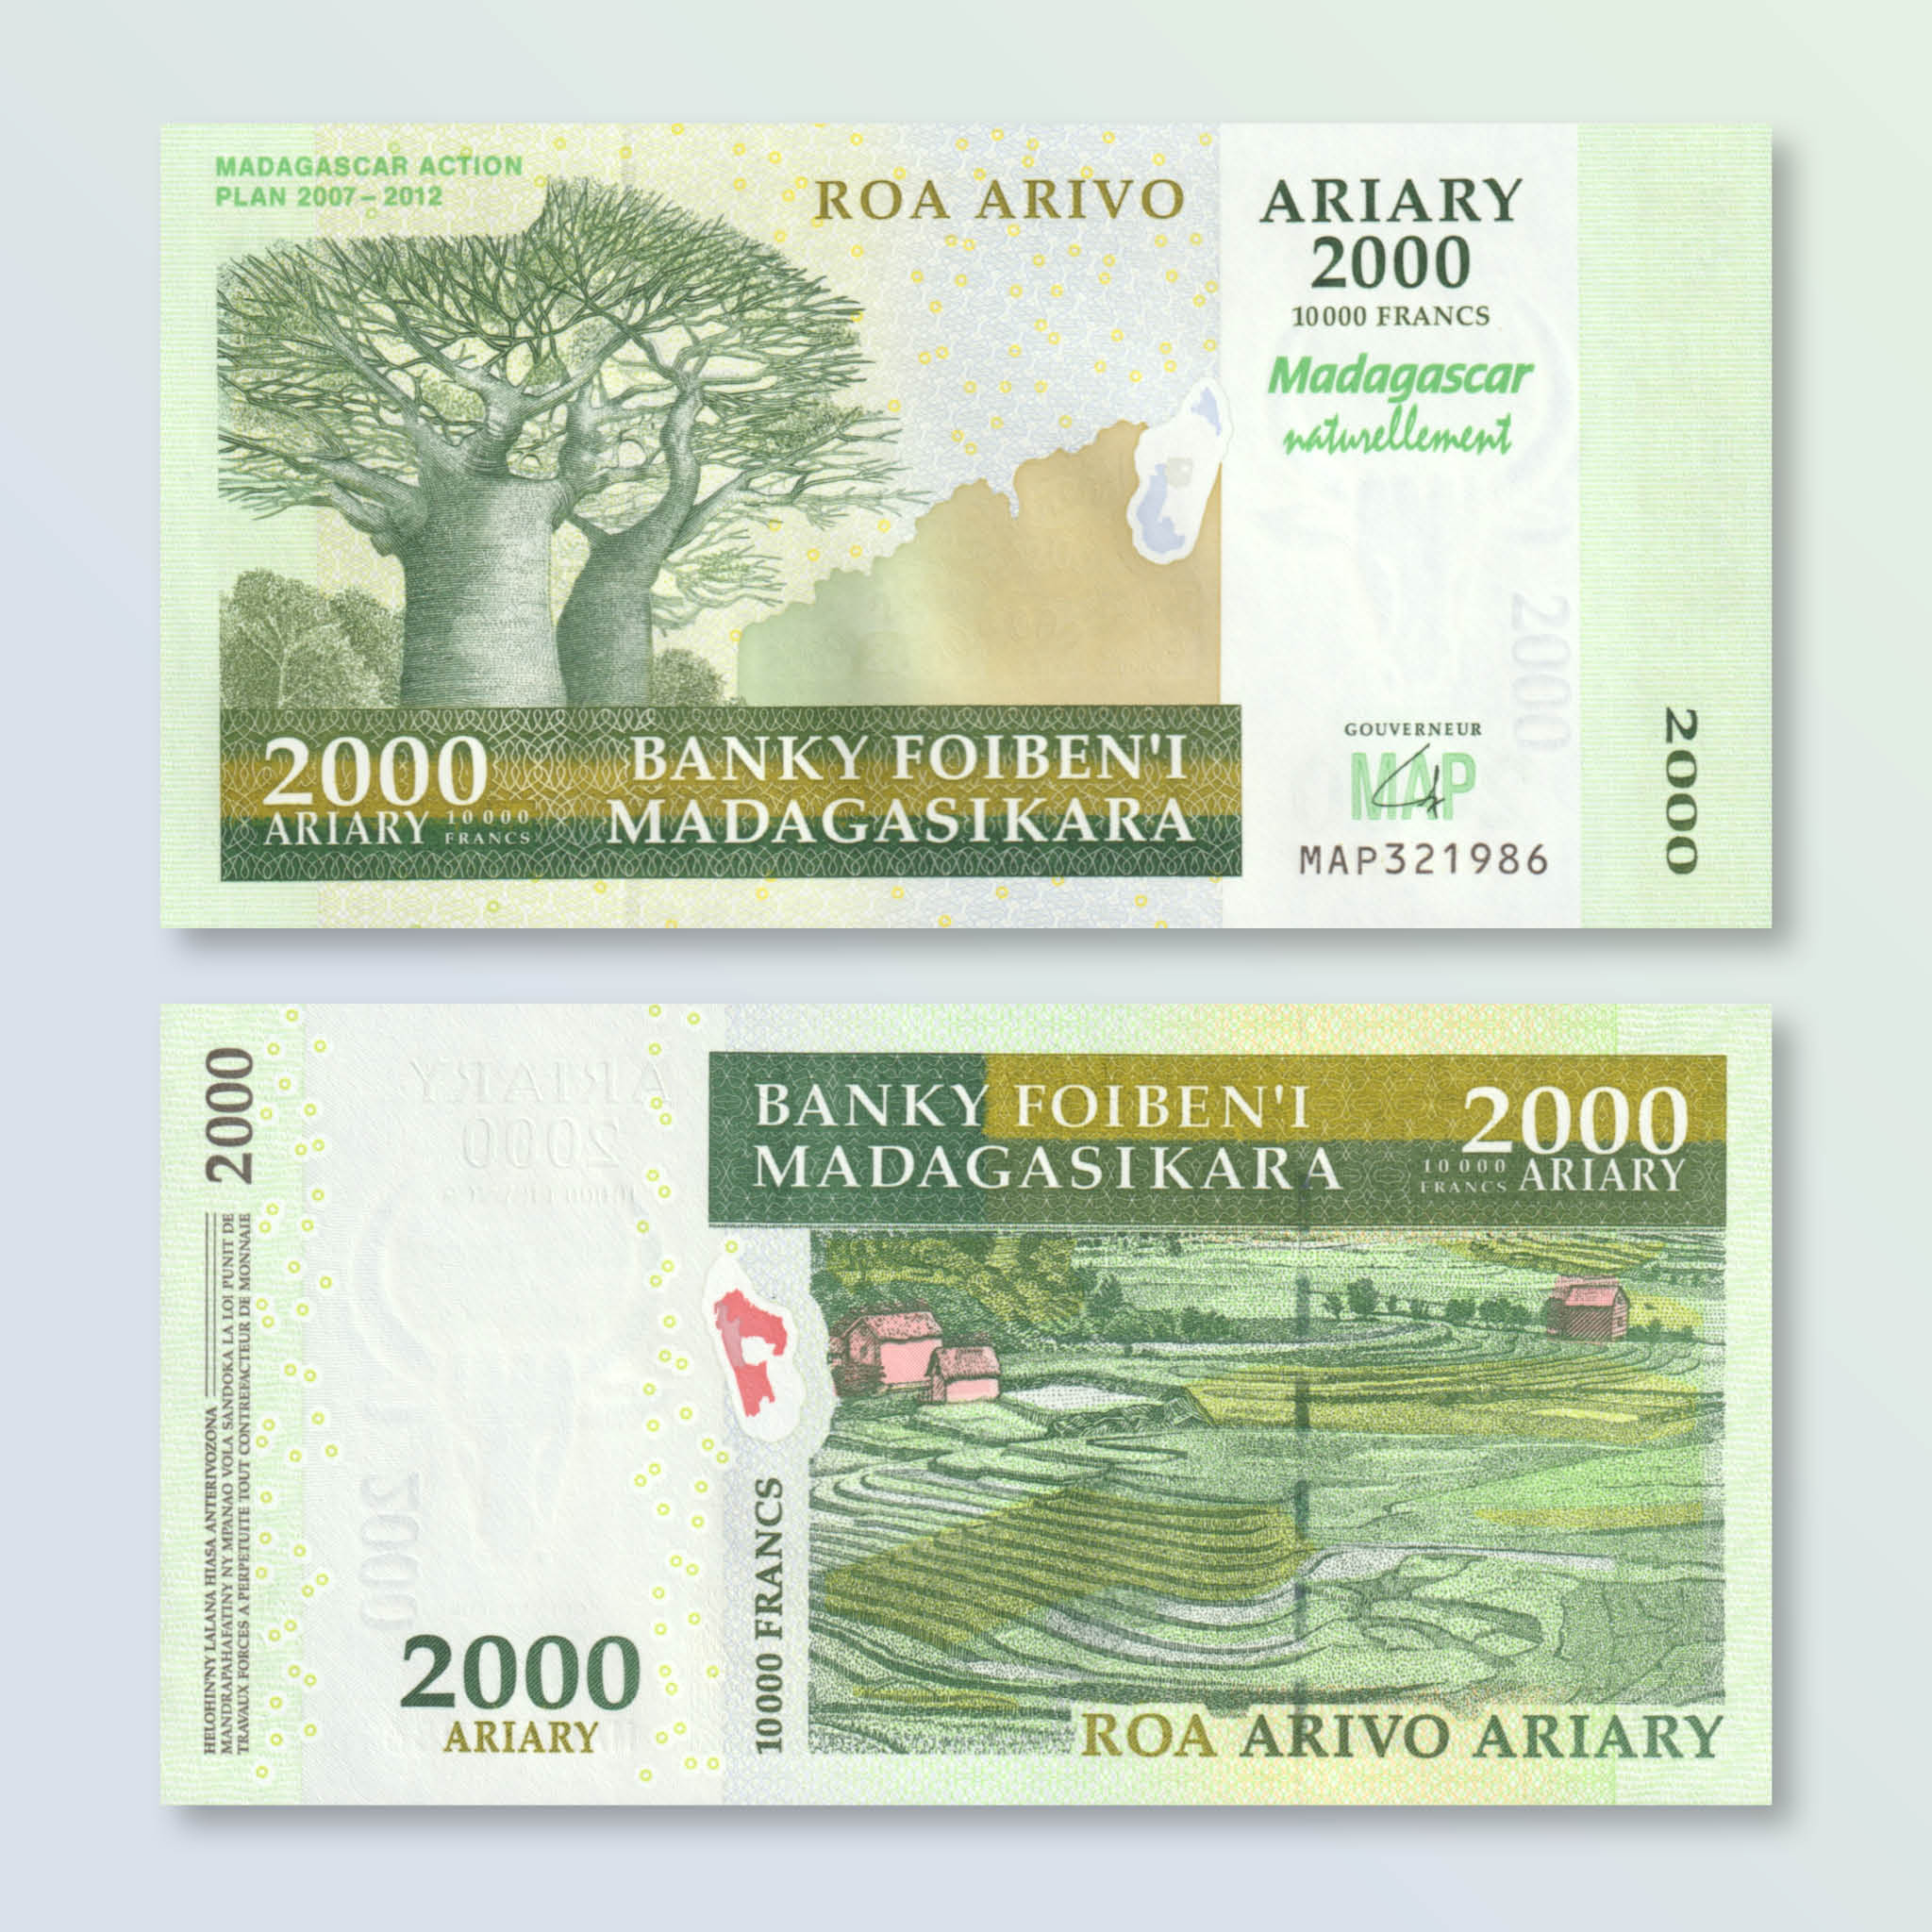 Madagascar 2000 Ariary, 2007, B330a, P93a, UNC - Robert's World Money - World Banknotes